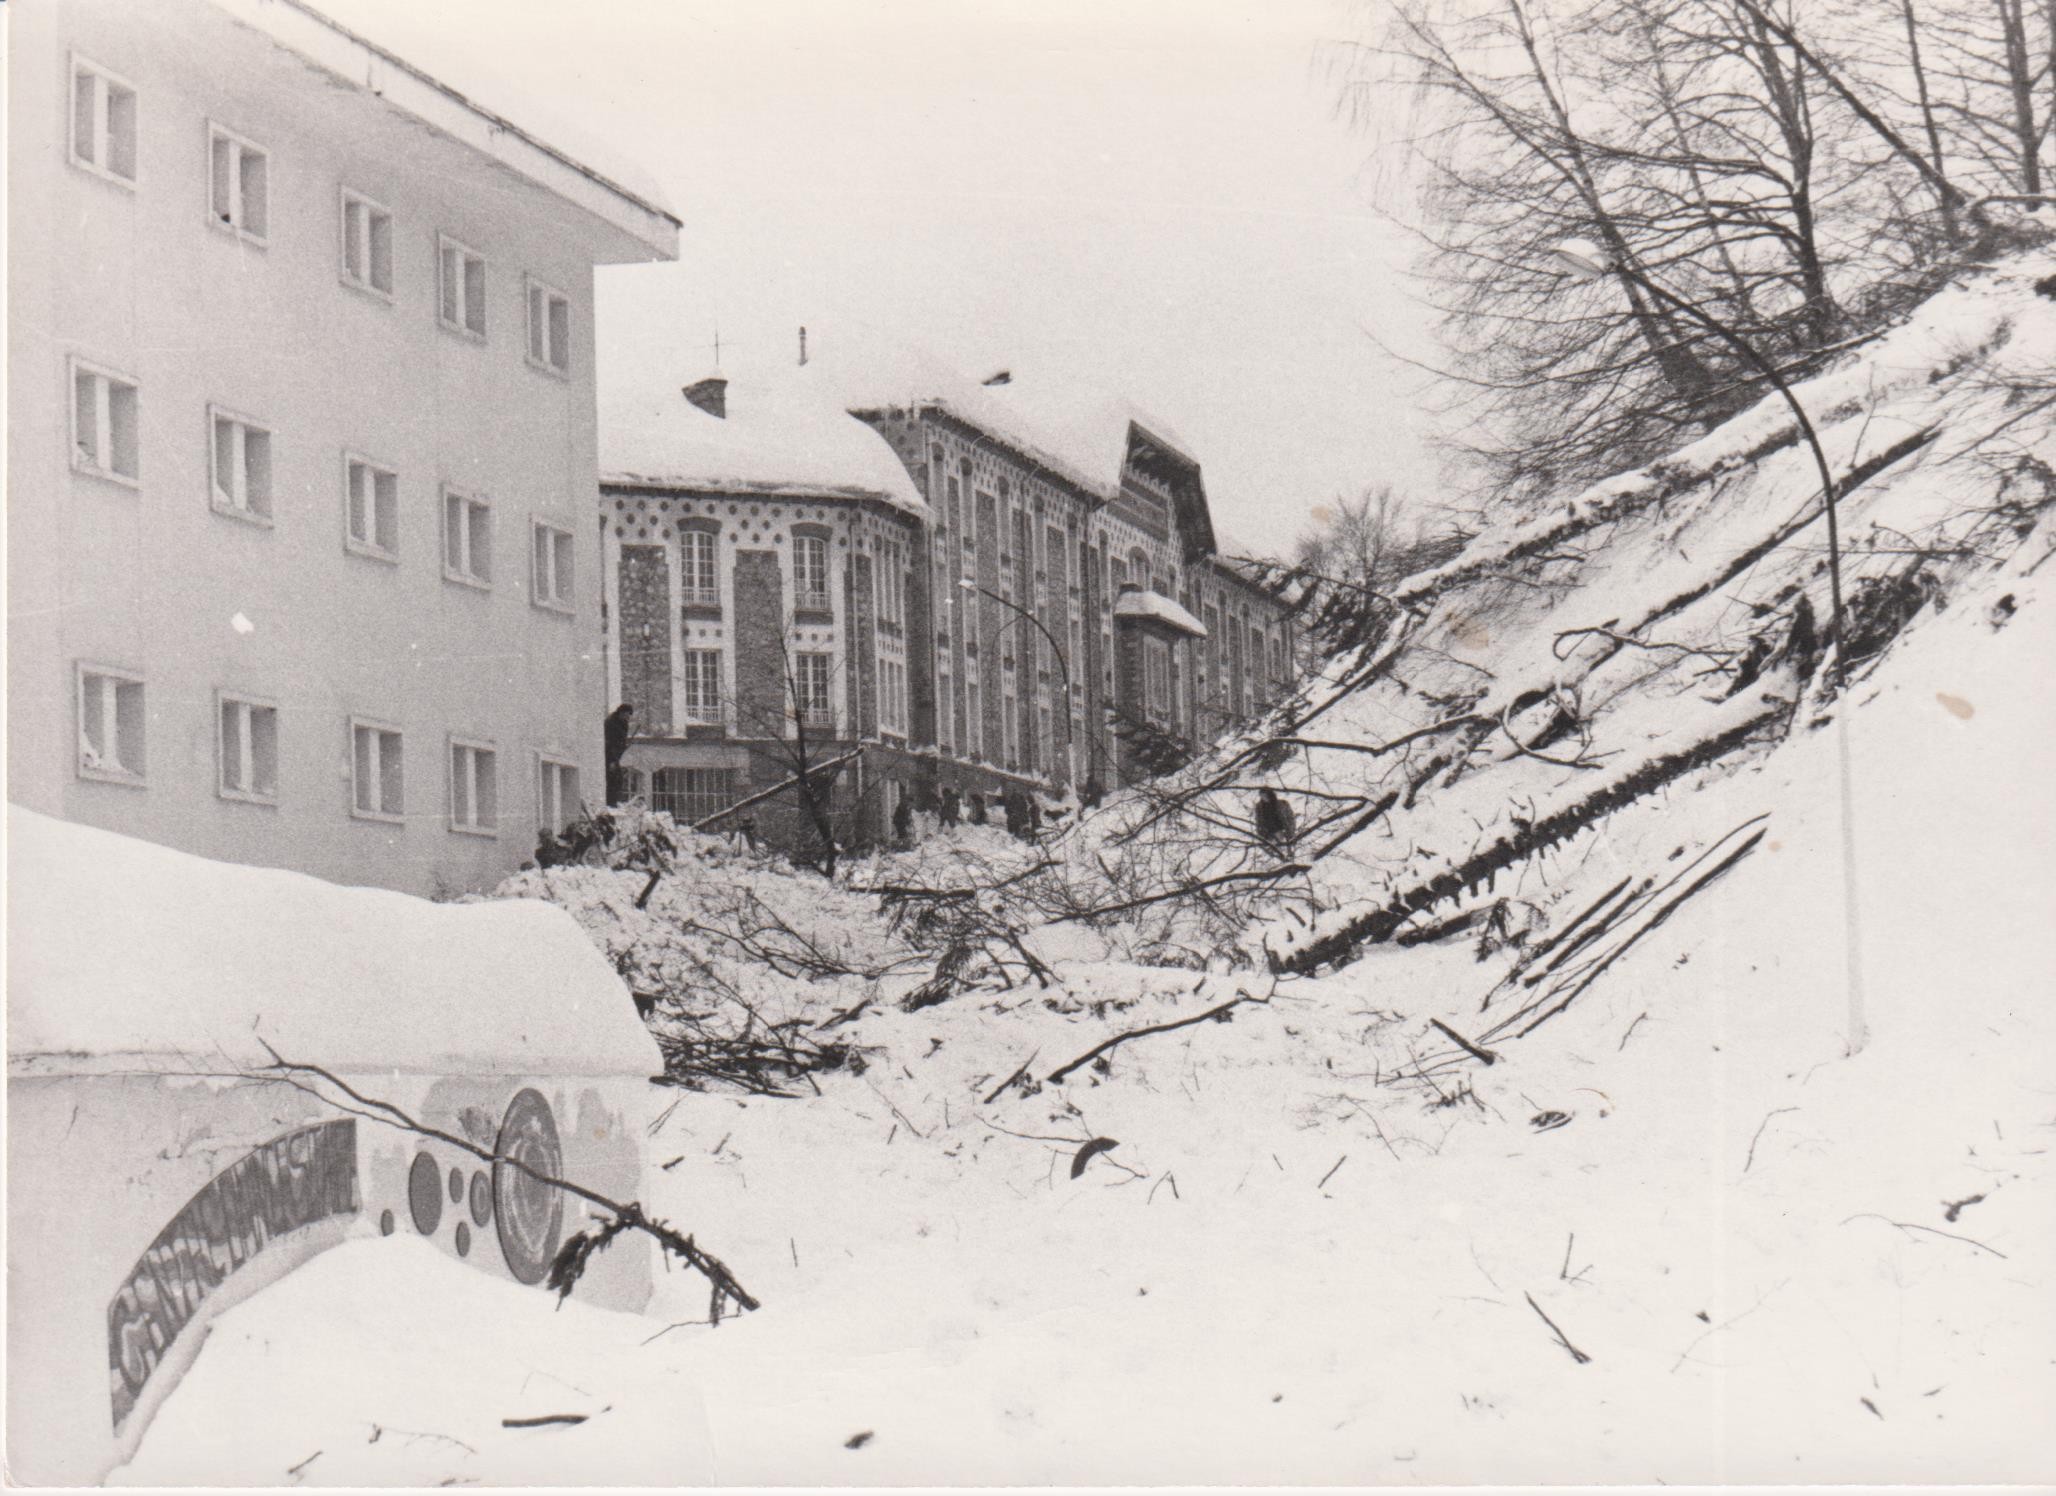 Coulee neige janvier 1981 sanas